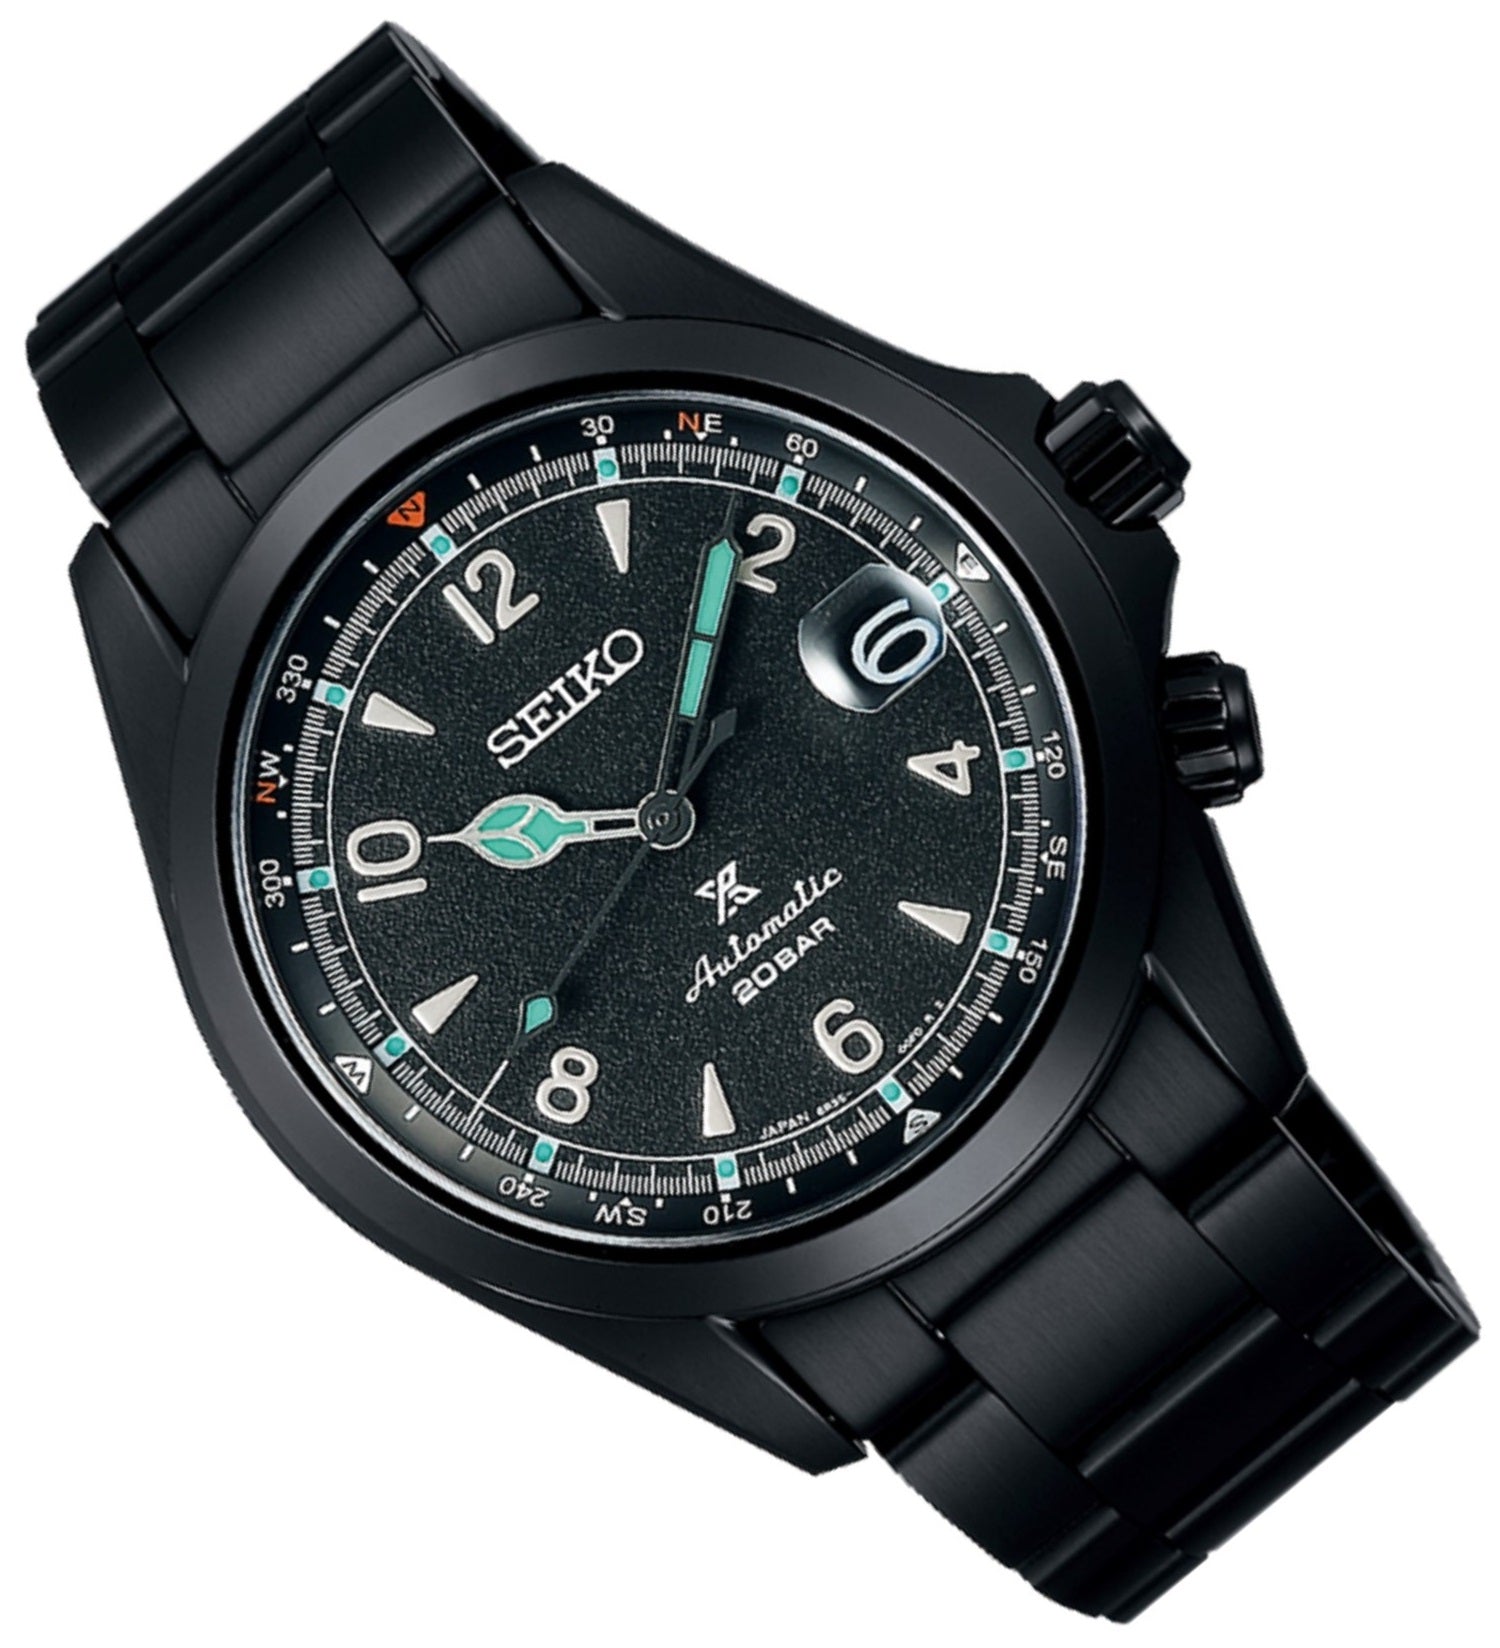 Seiko SPB337J1 Prospex The Black Series Limited Ed Alpinist Automatic Watch-Watch Portal Philippines